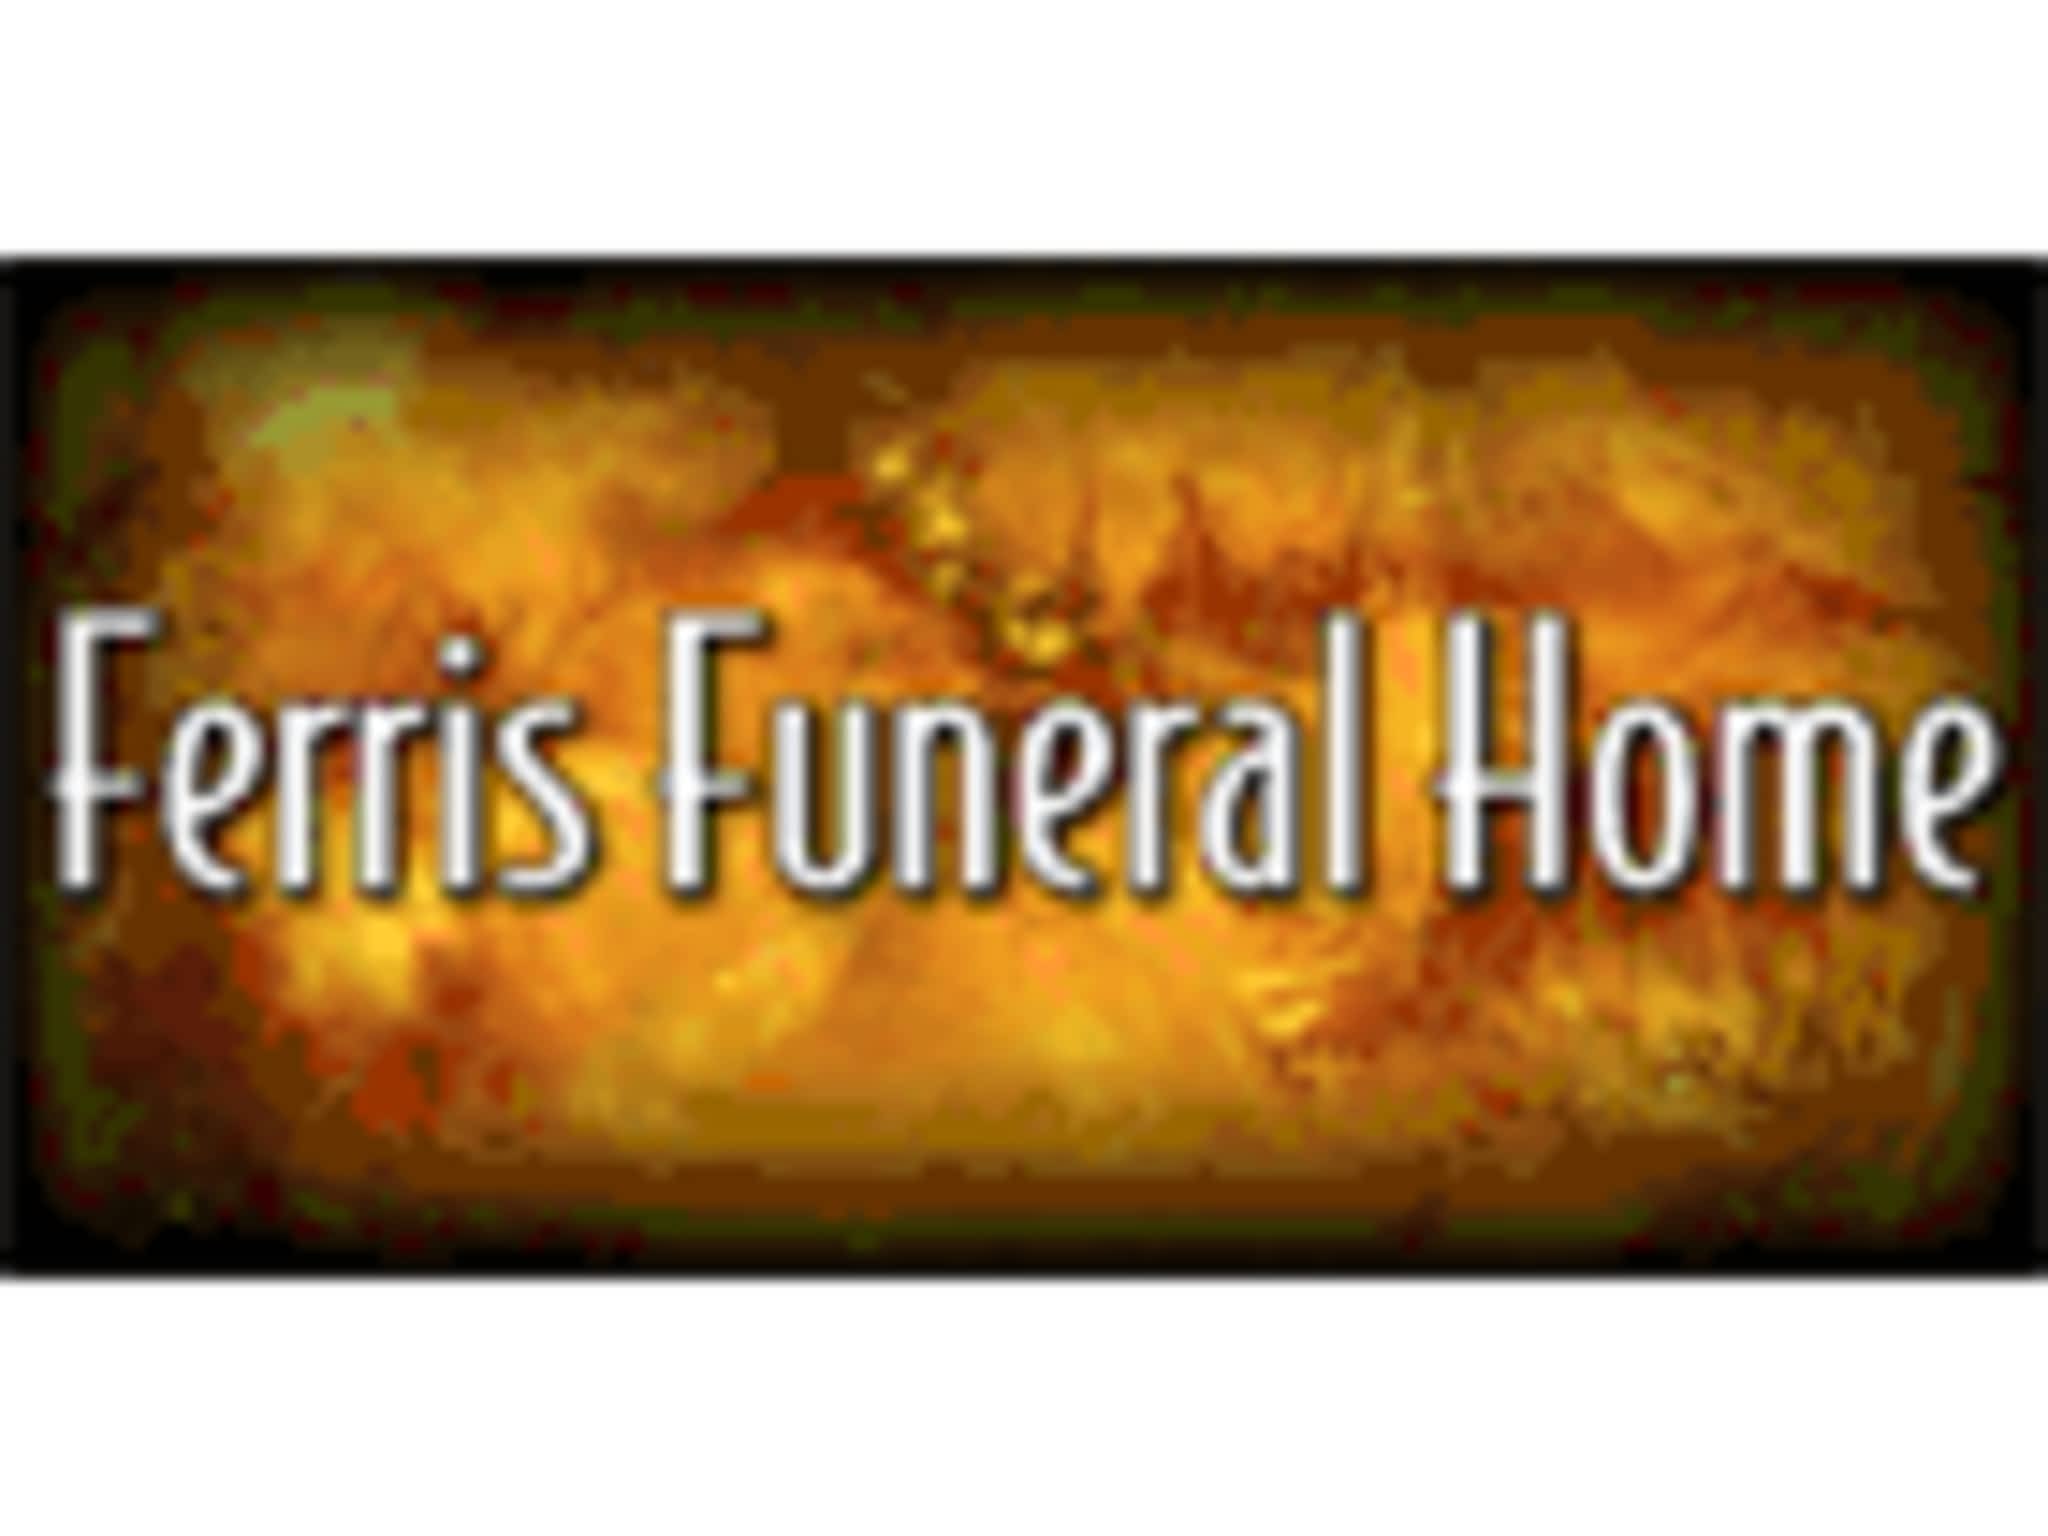 photo Ferris Funeral Home